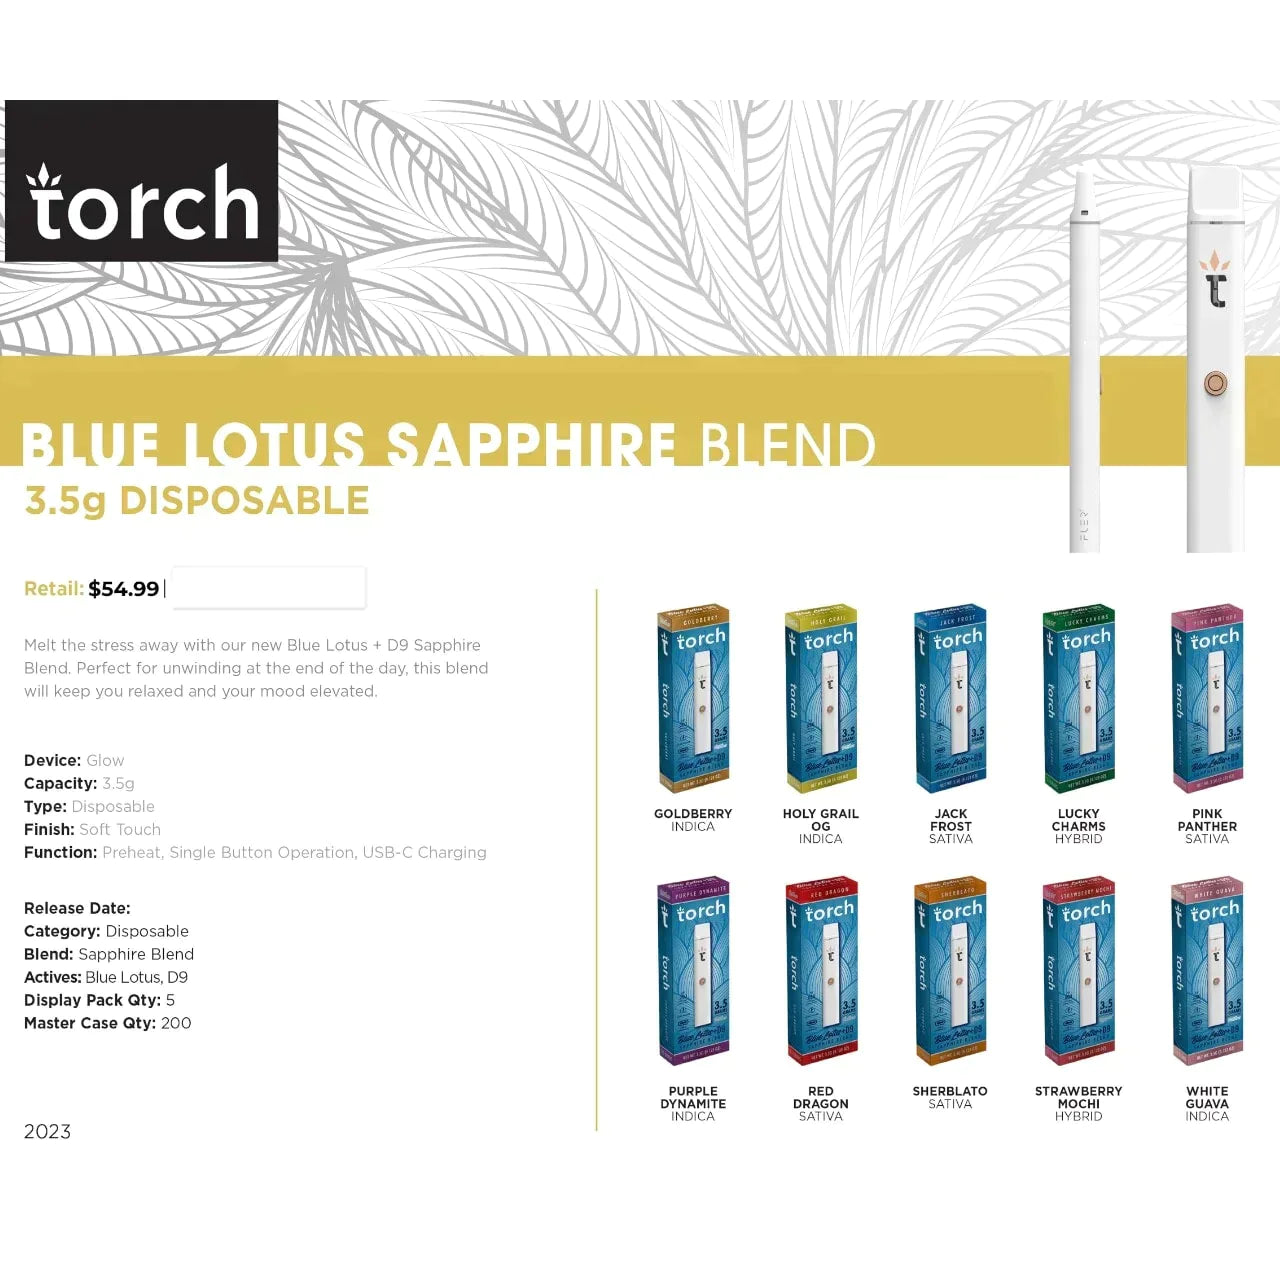 Blue Lotus White Guava Indica Torch Delta 9 THC Disposable Vape Pen 3.5g